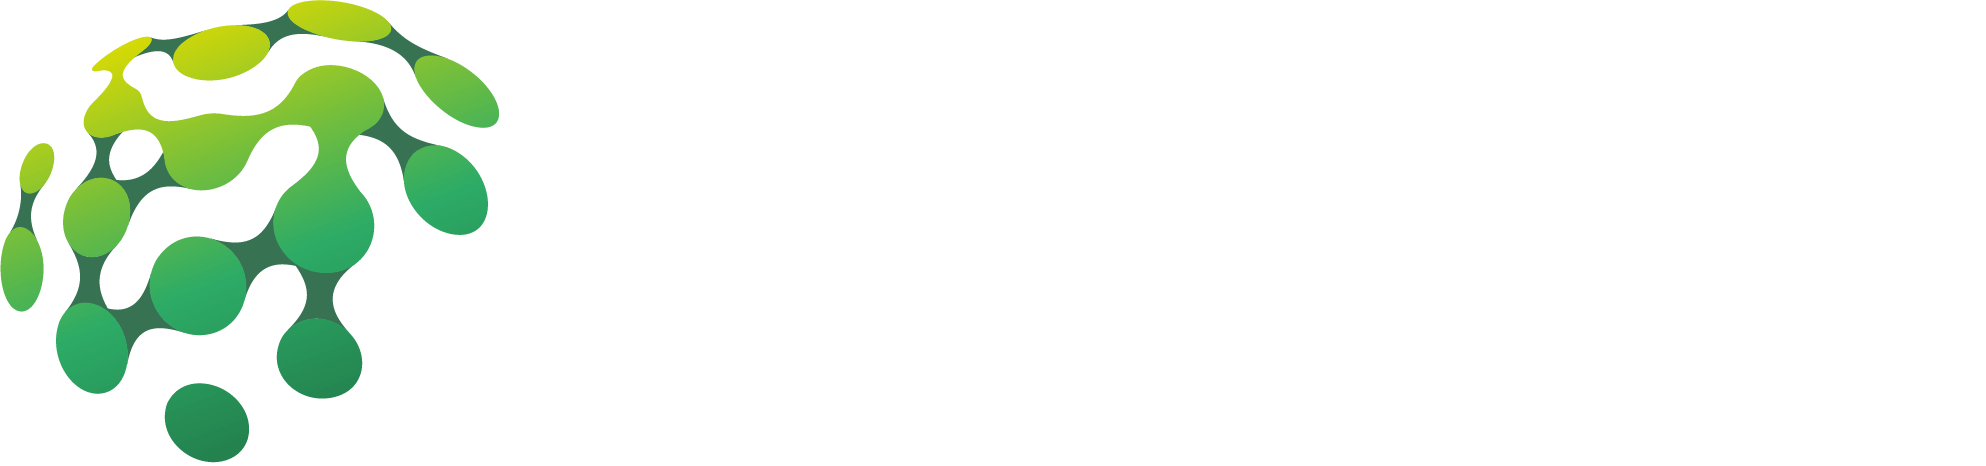 HUB-Alt-White Logo